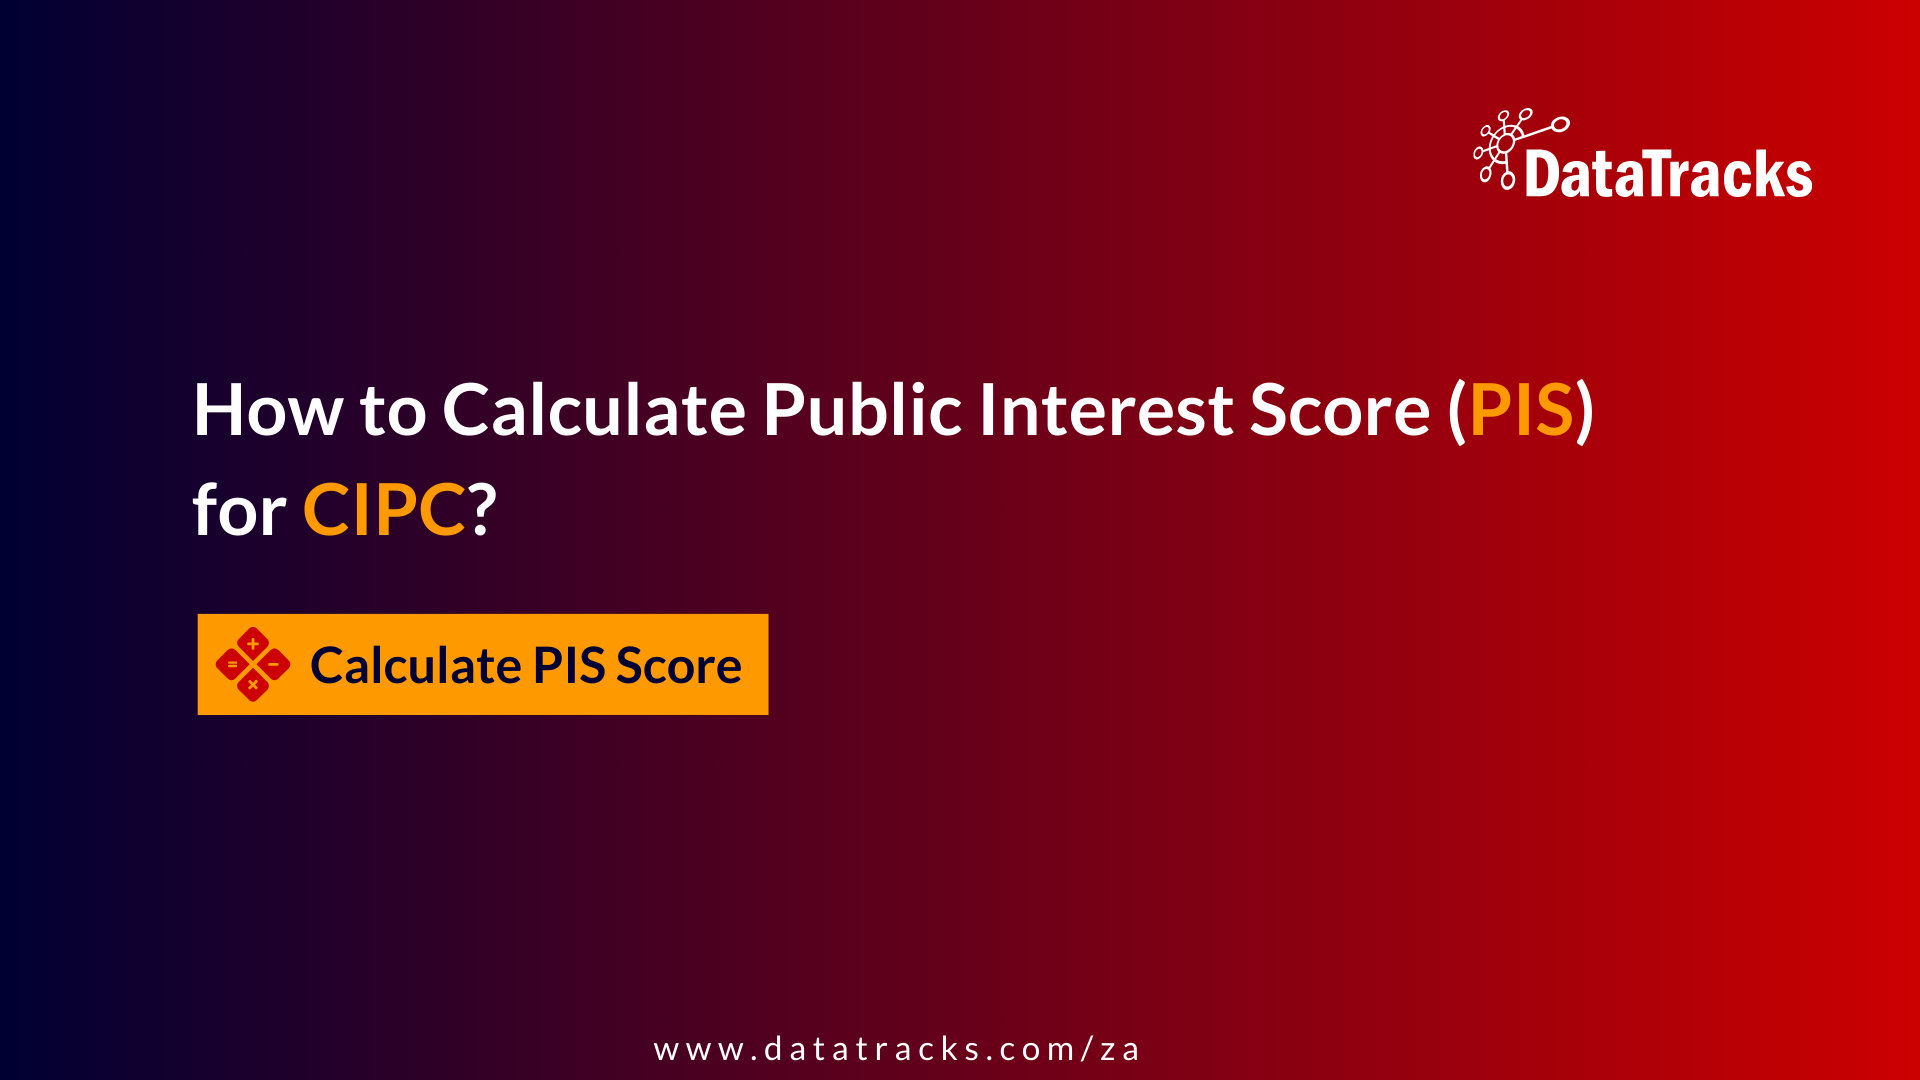 How to Calculate Public Interest Score for CIPC?